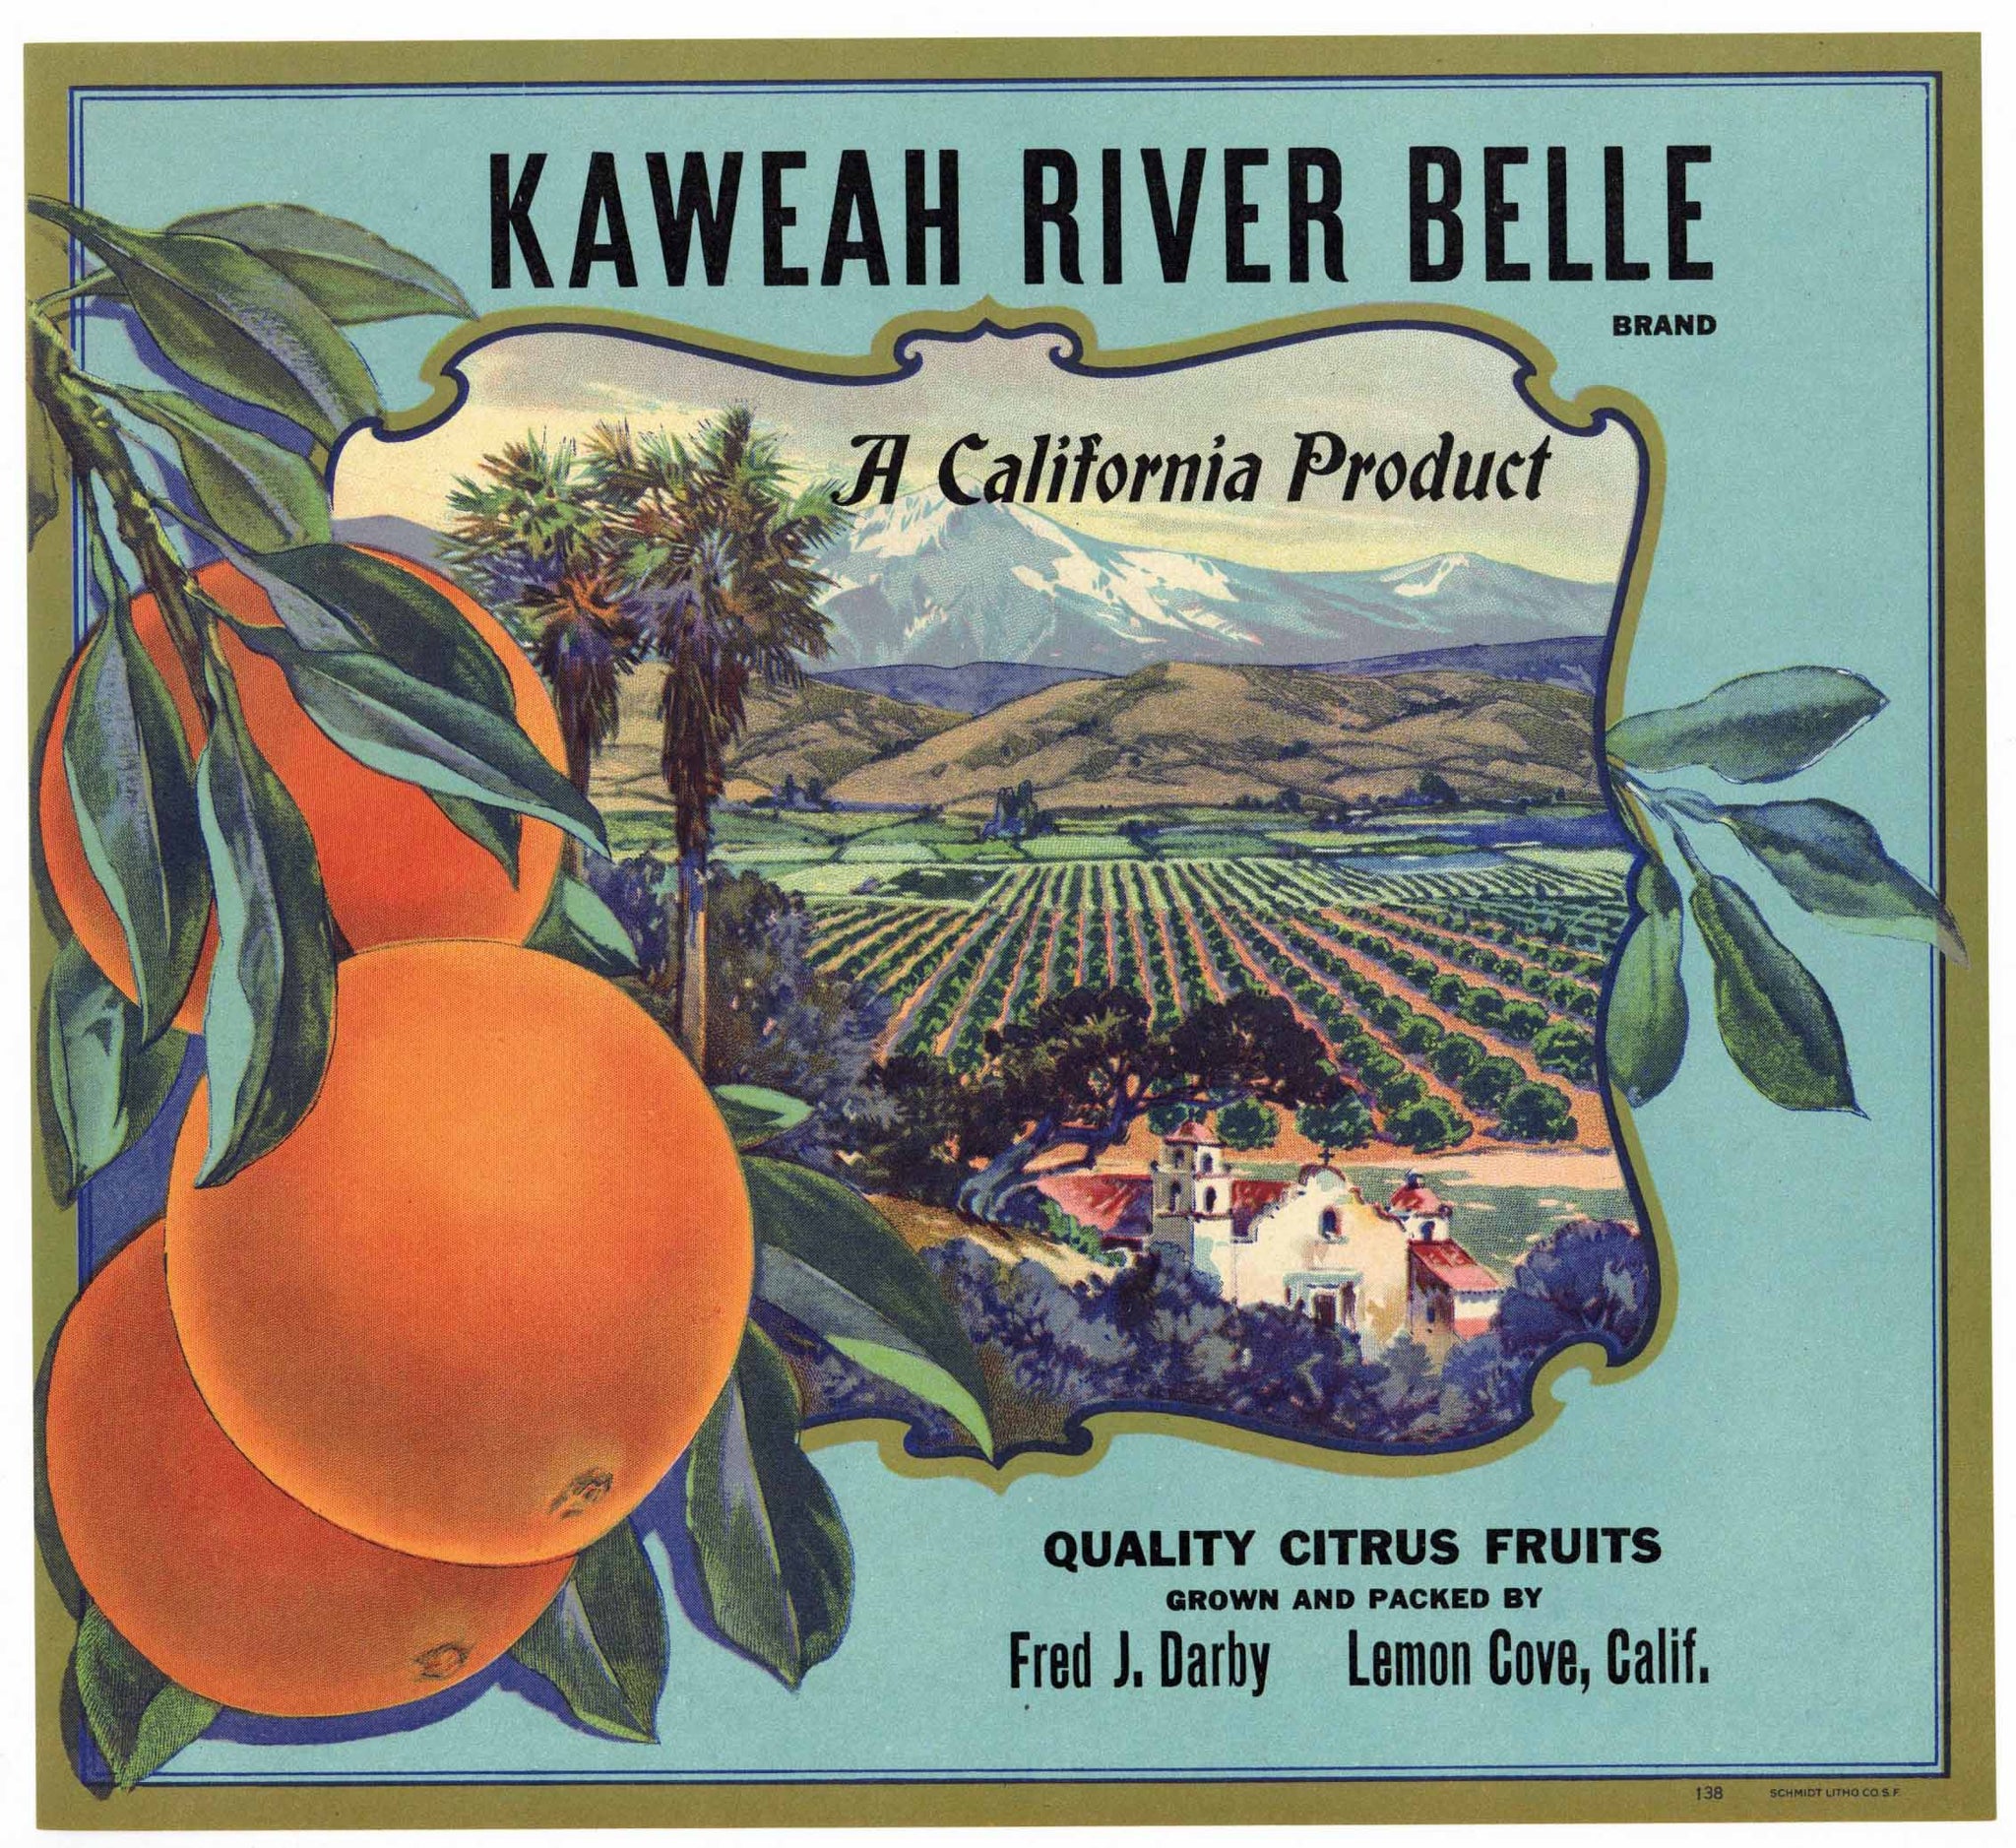 Kaweah River Belle Brand Vintage Tulare County Orange Crate Label